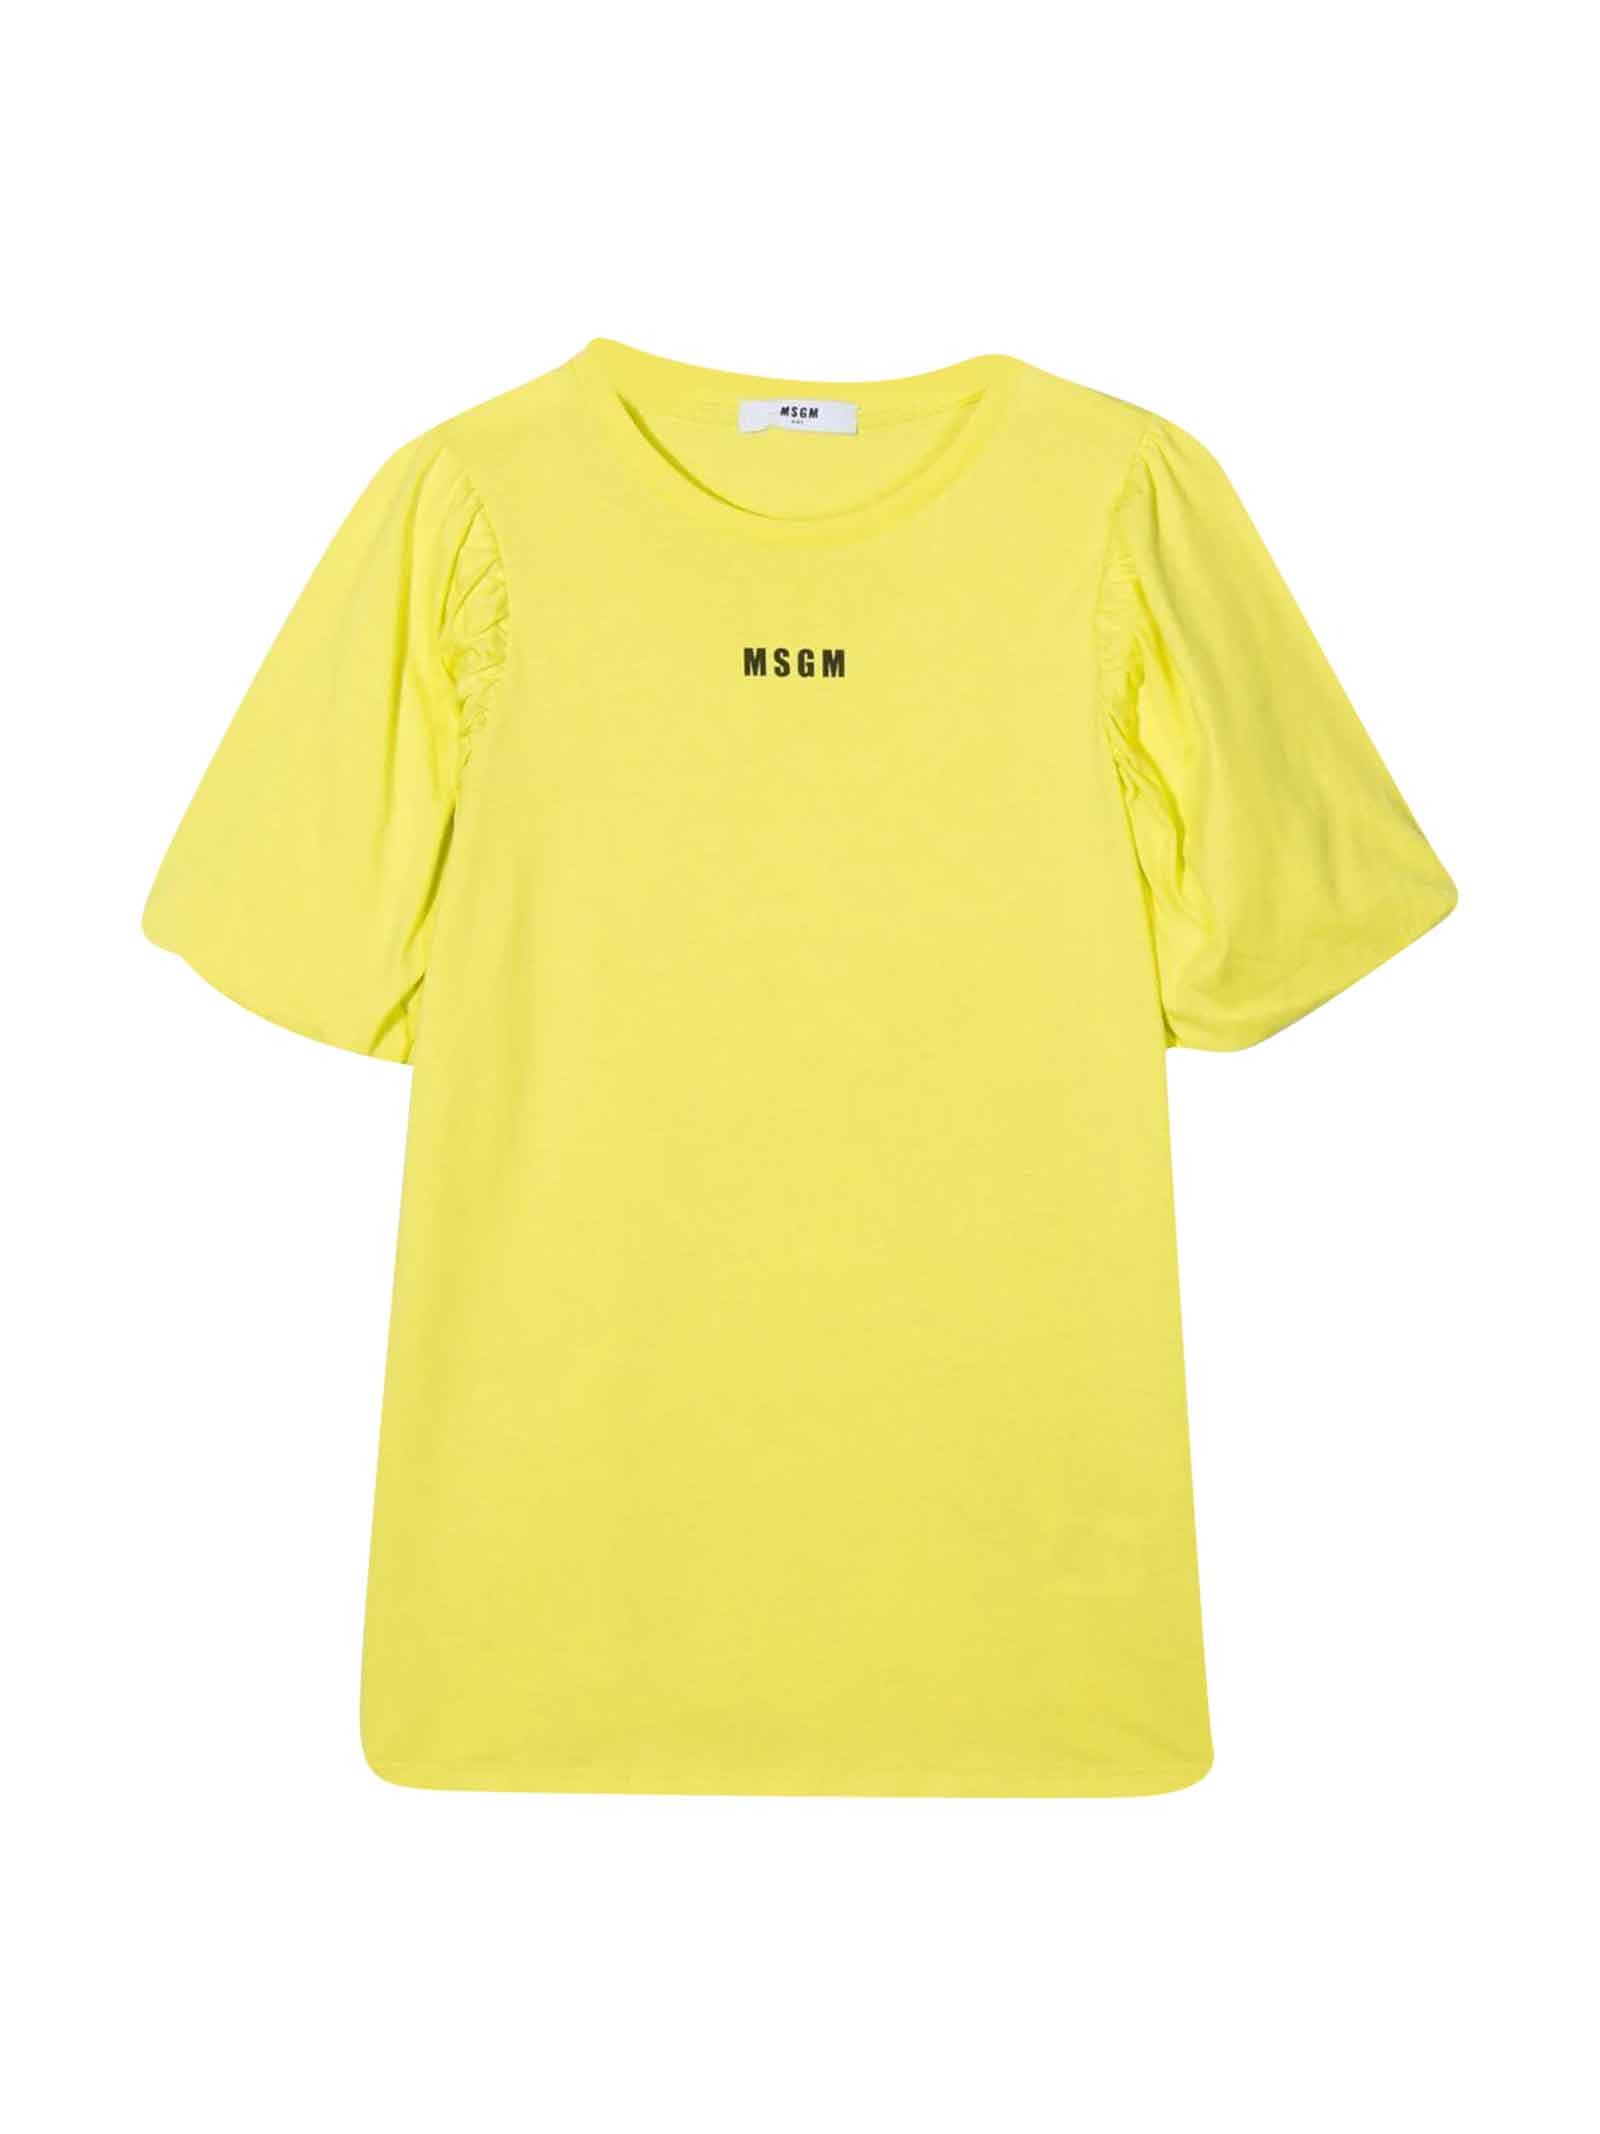 MSGM Girl Yellow T-shirt